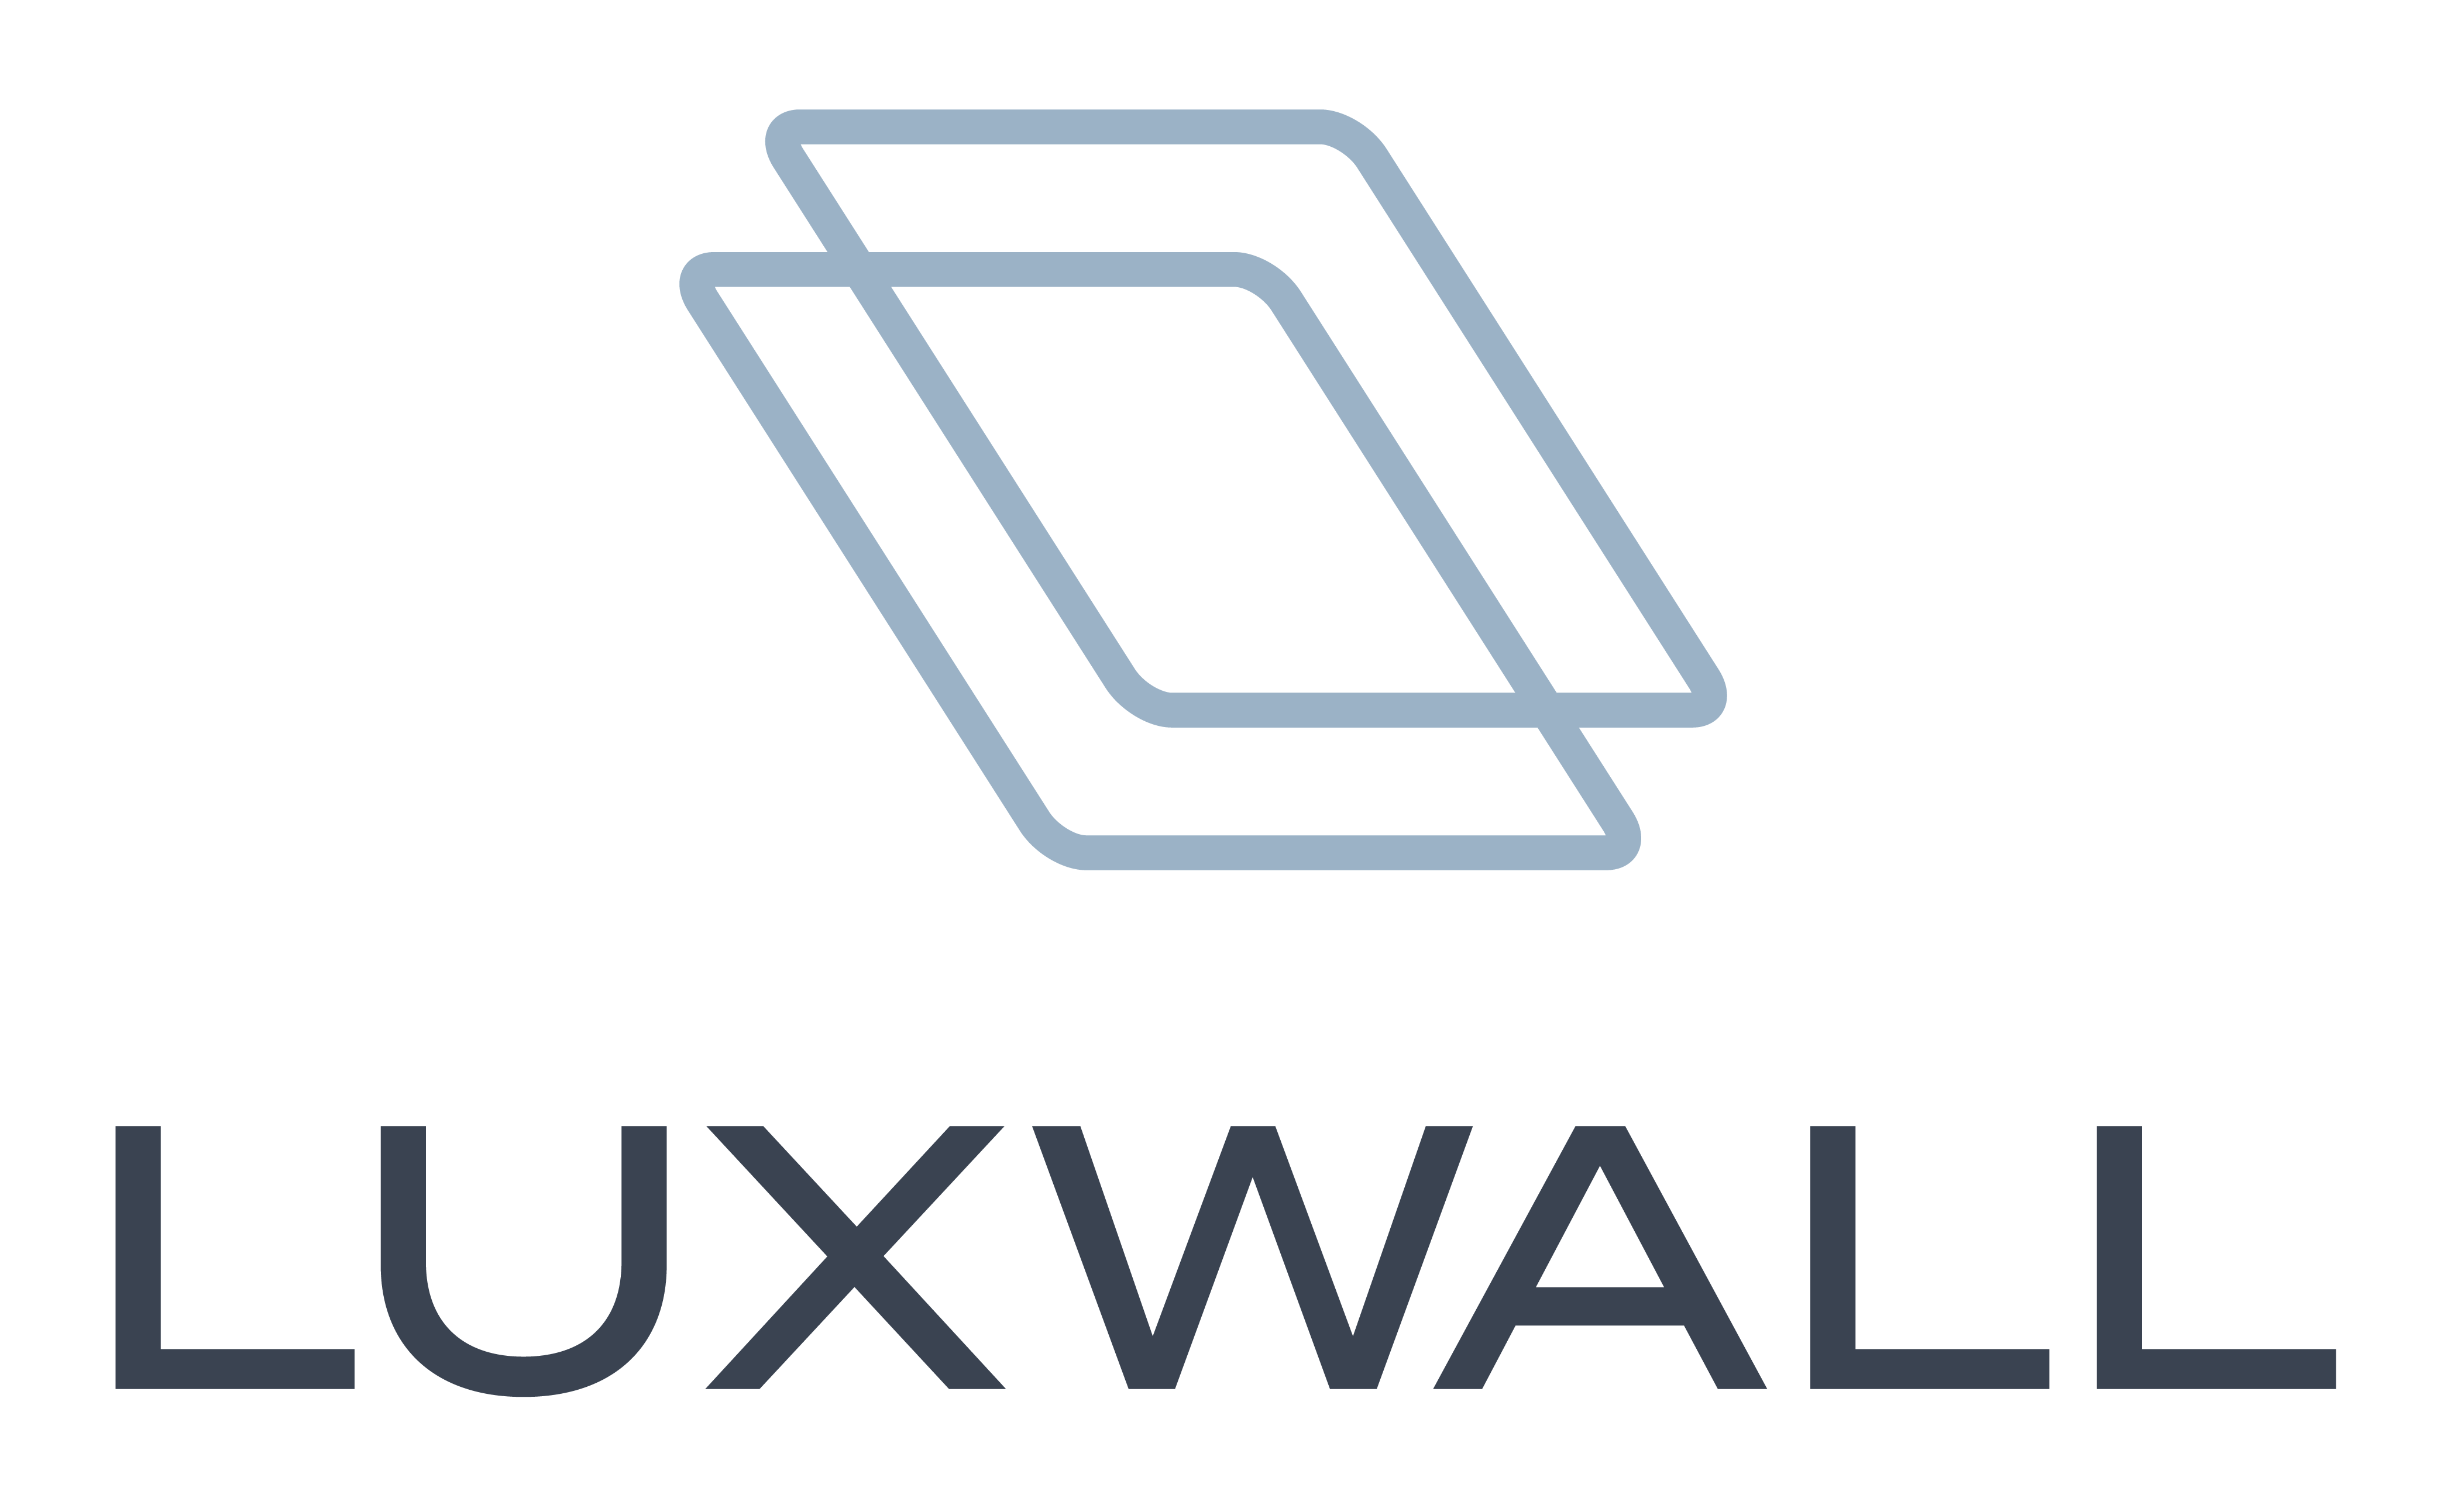 Luxwall logo